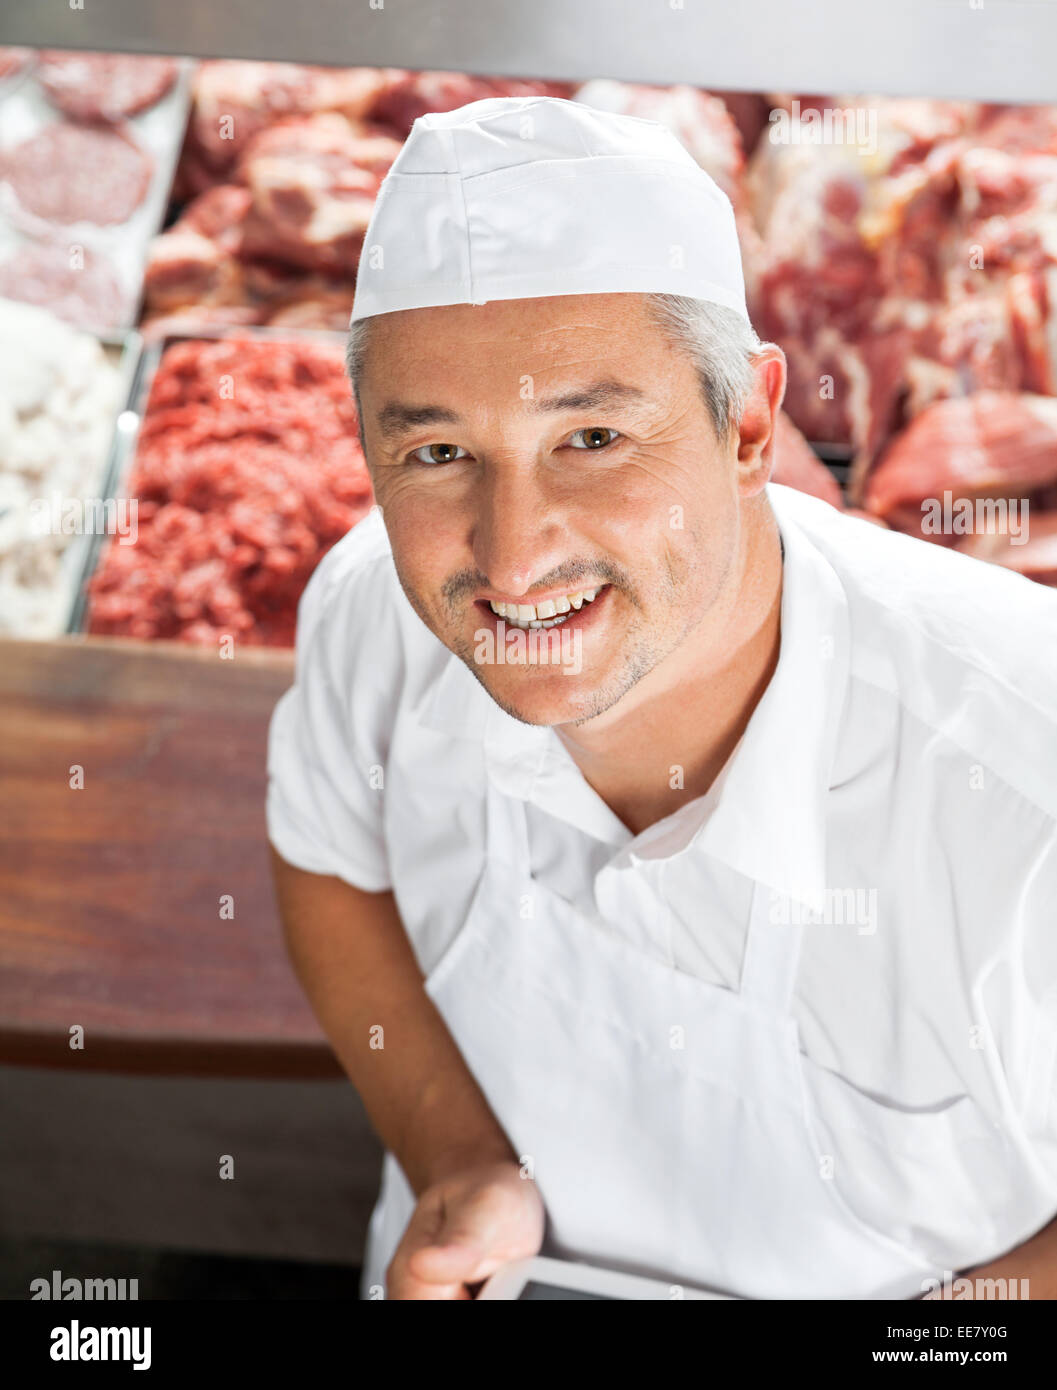 Portrait of happy butcher at display cabinet Banque D'Images